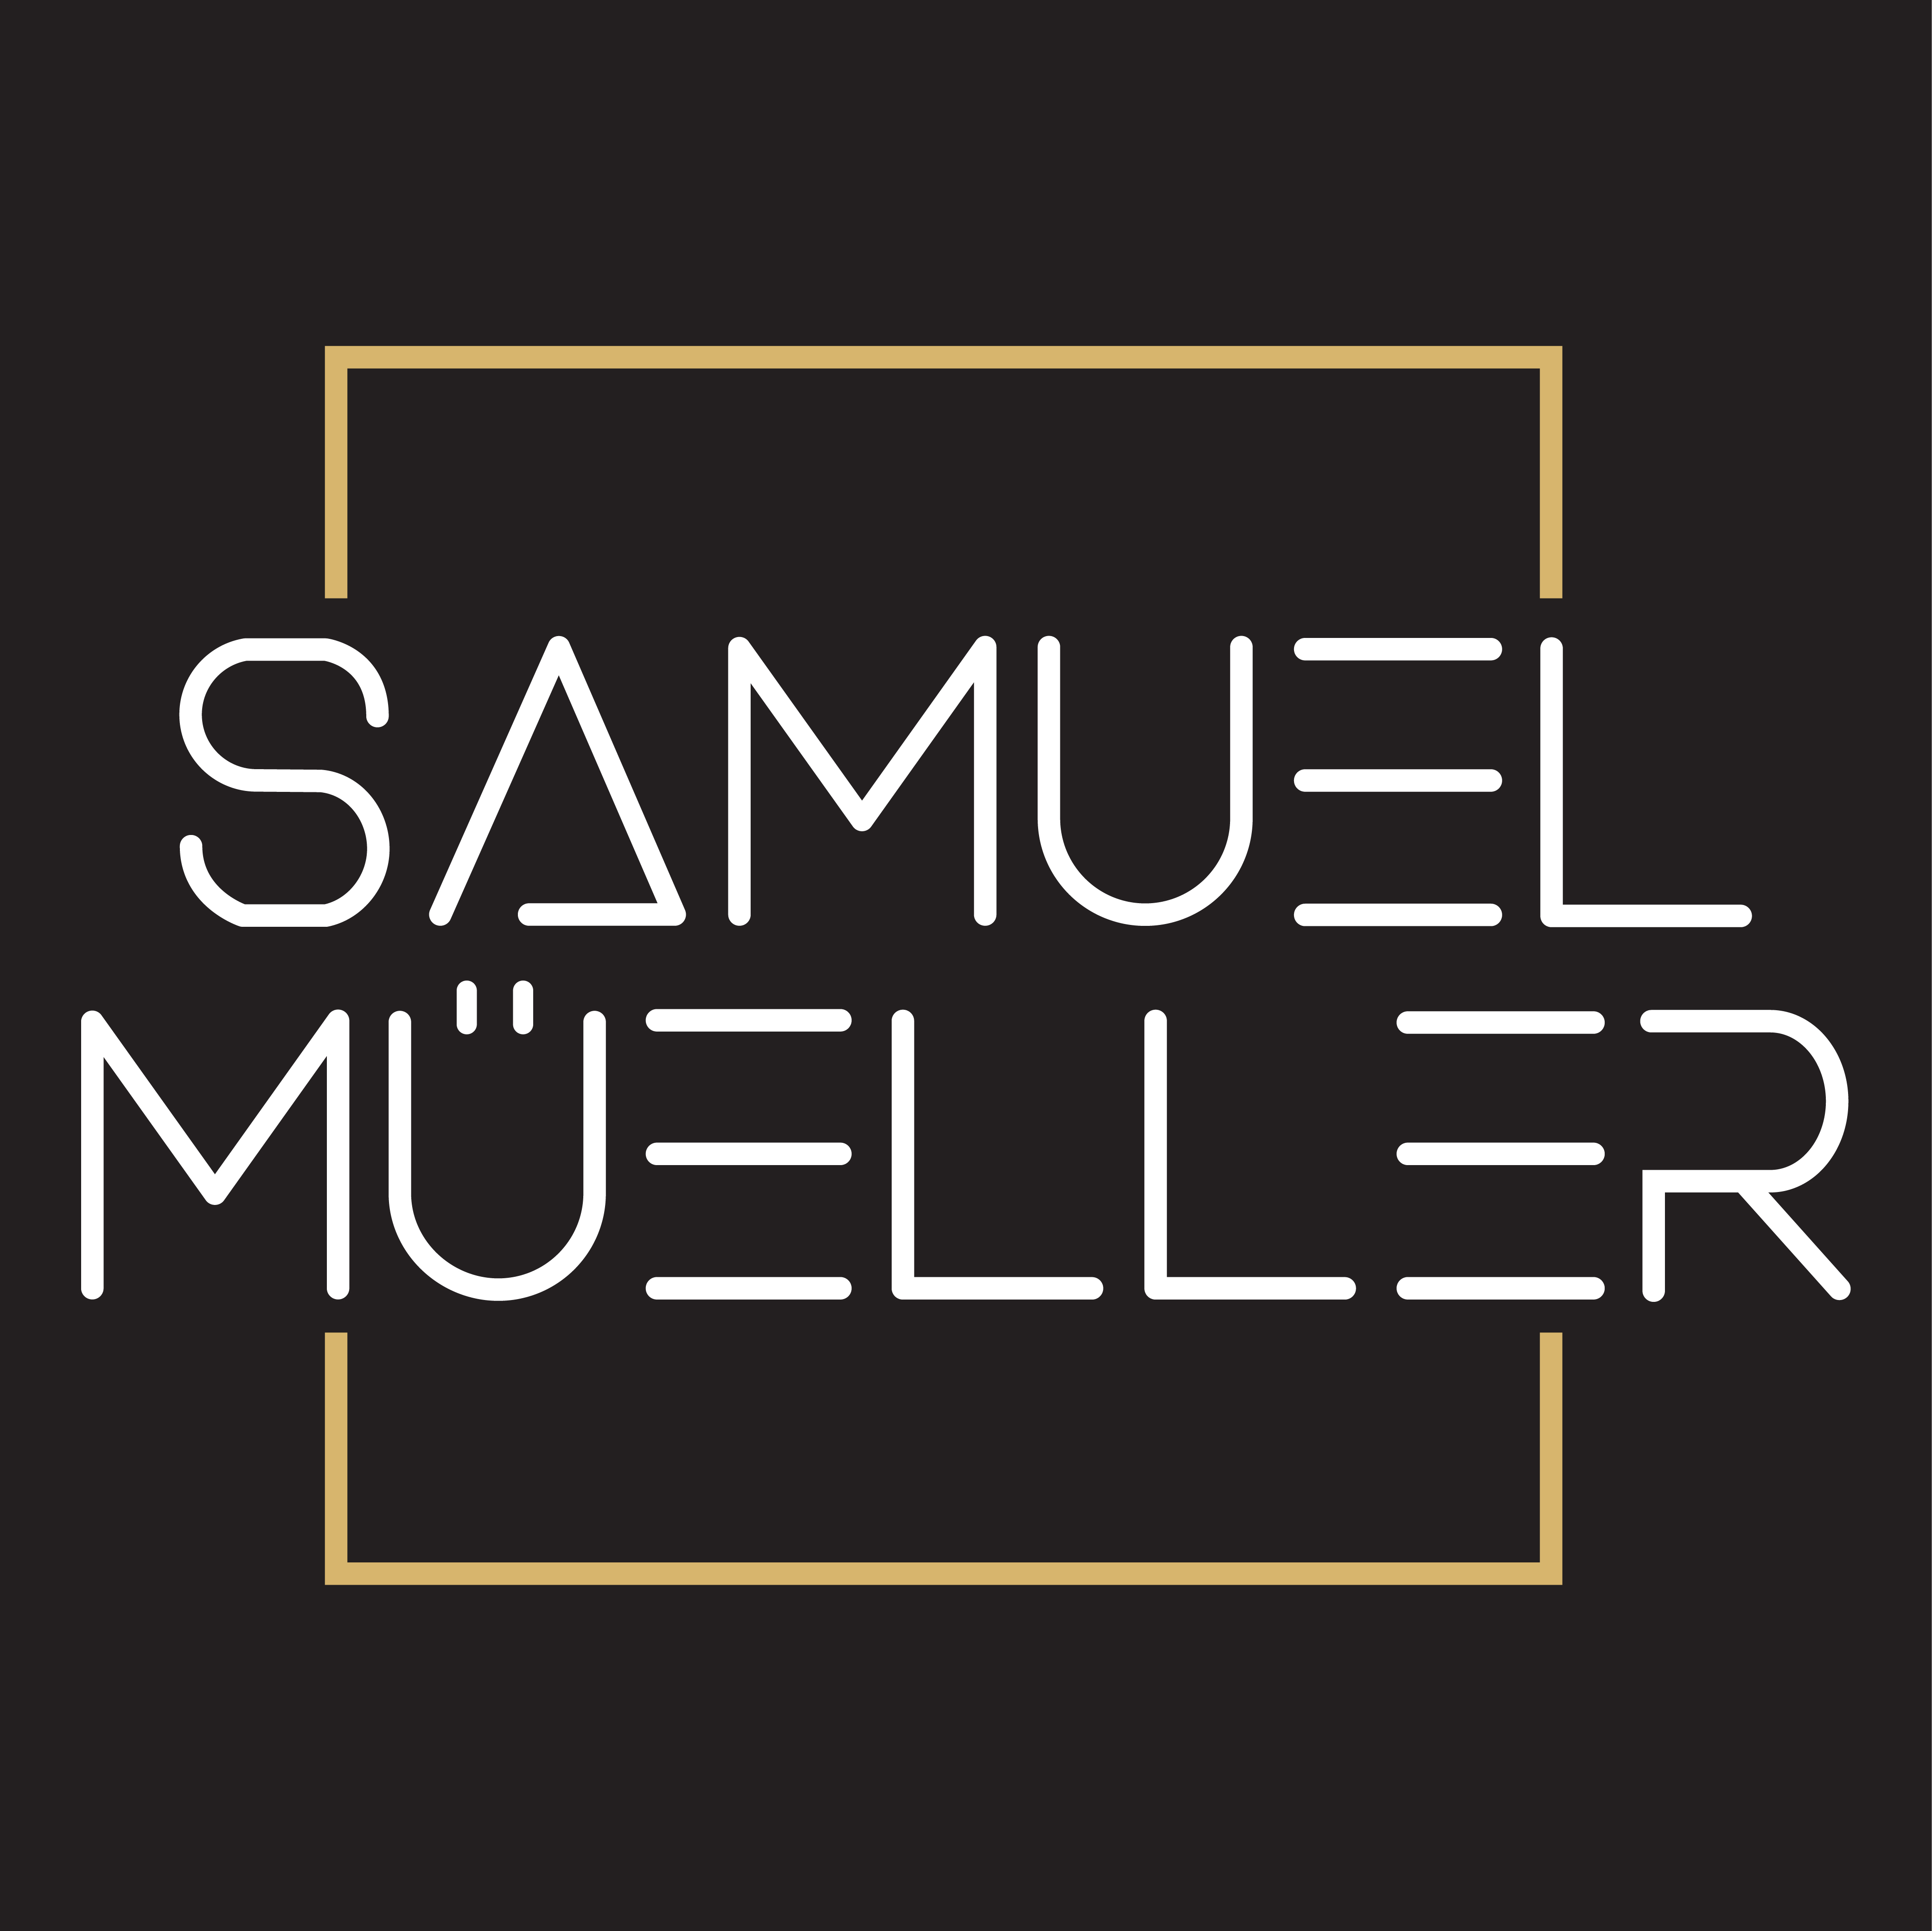 Samuel Müeller